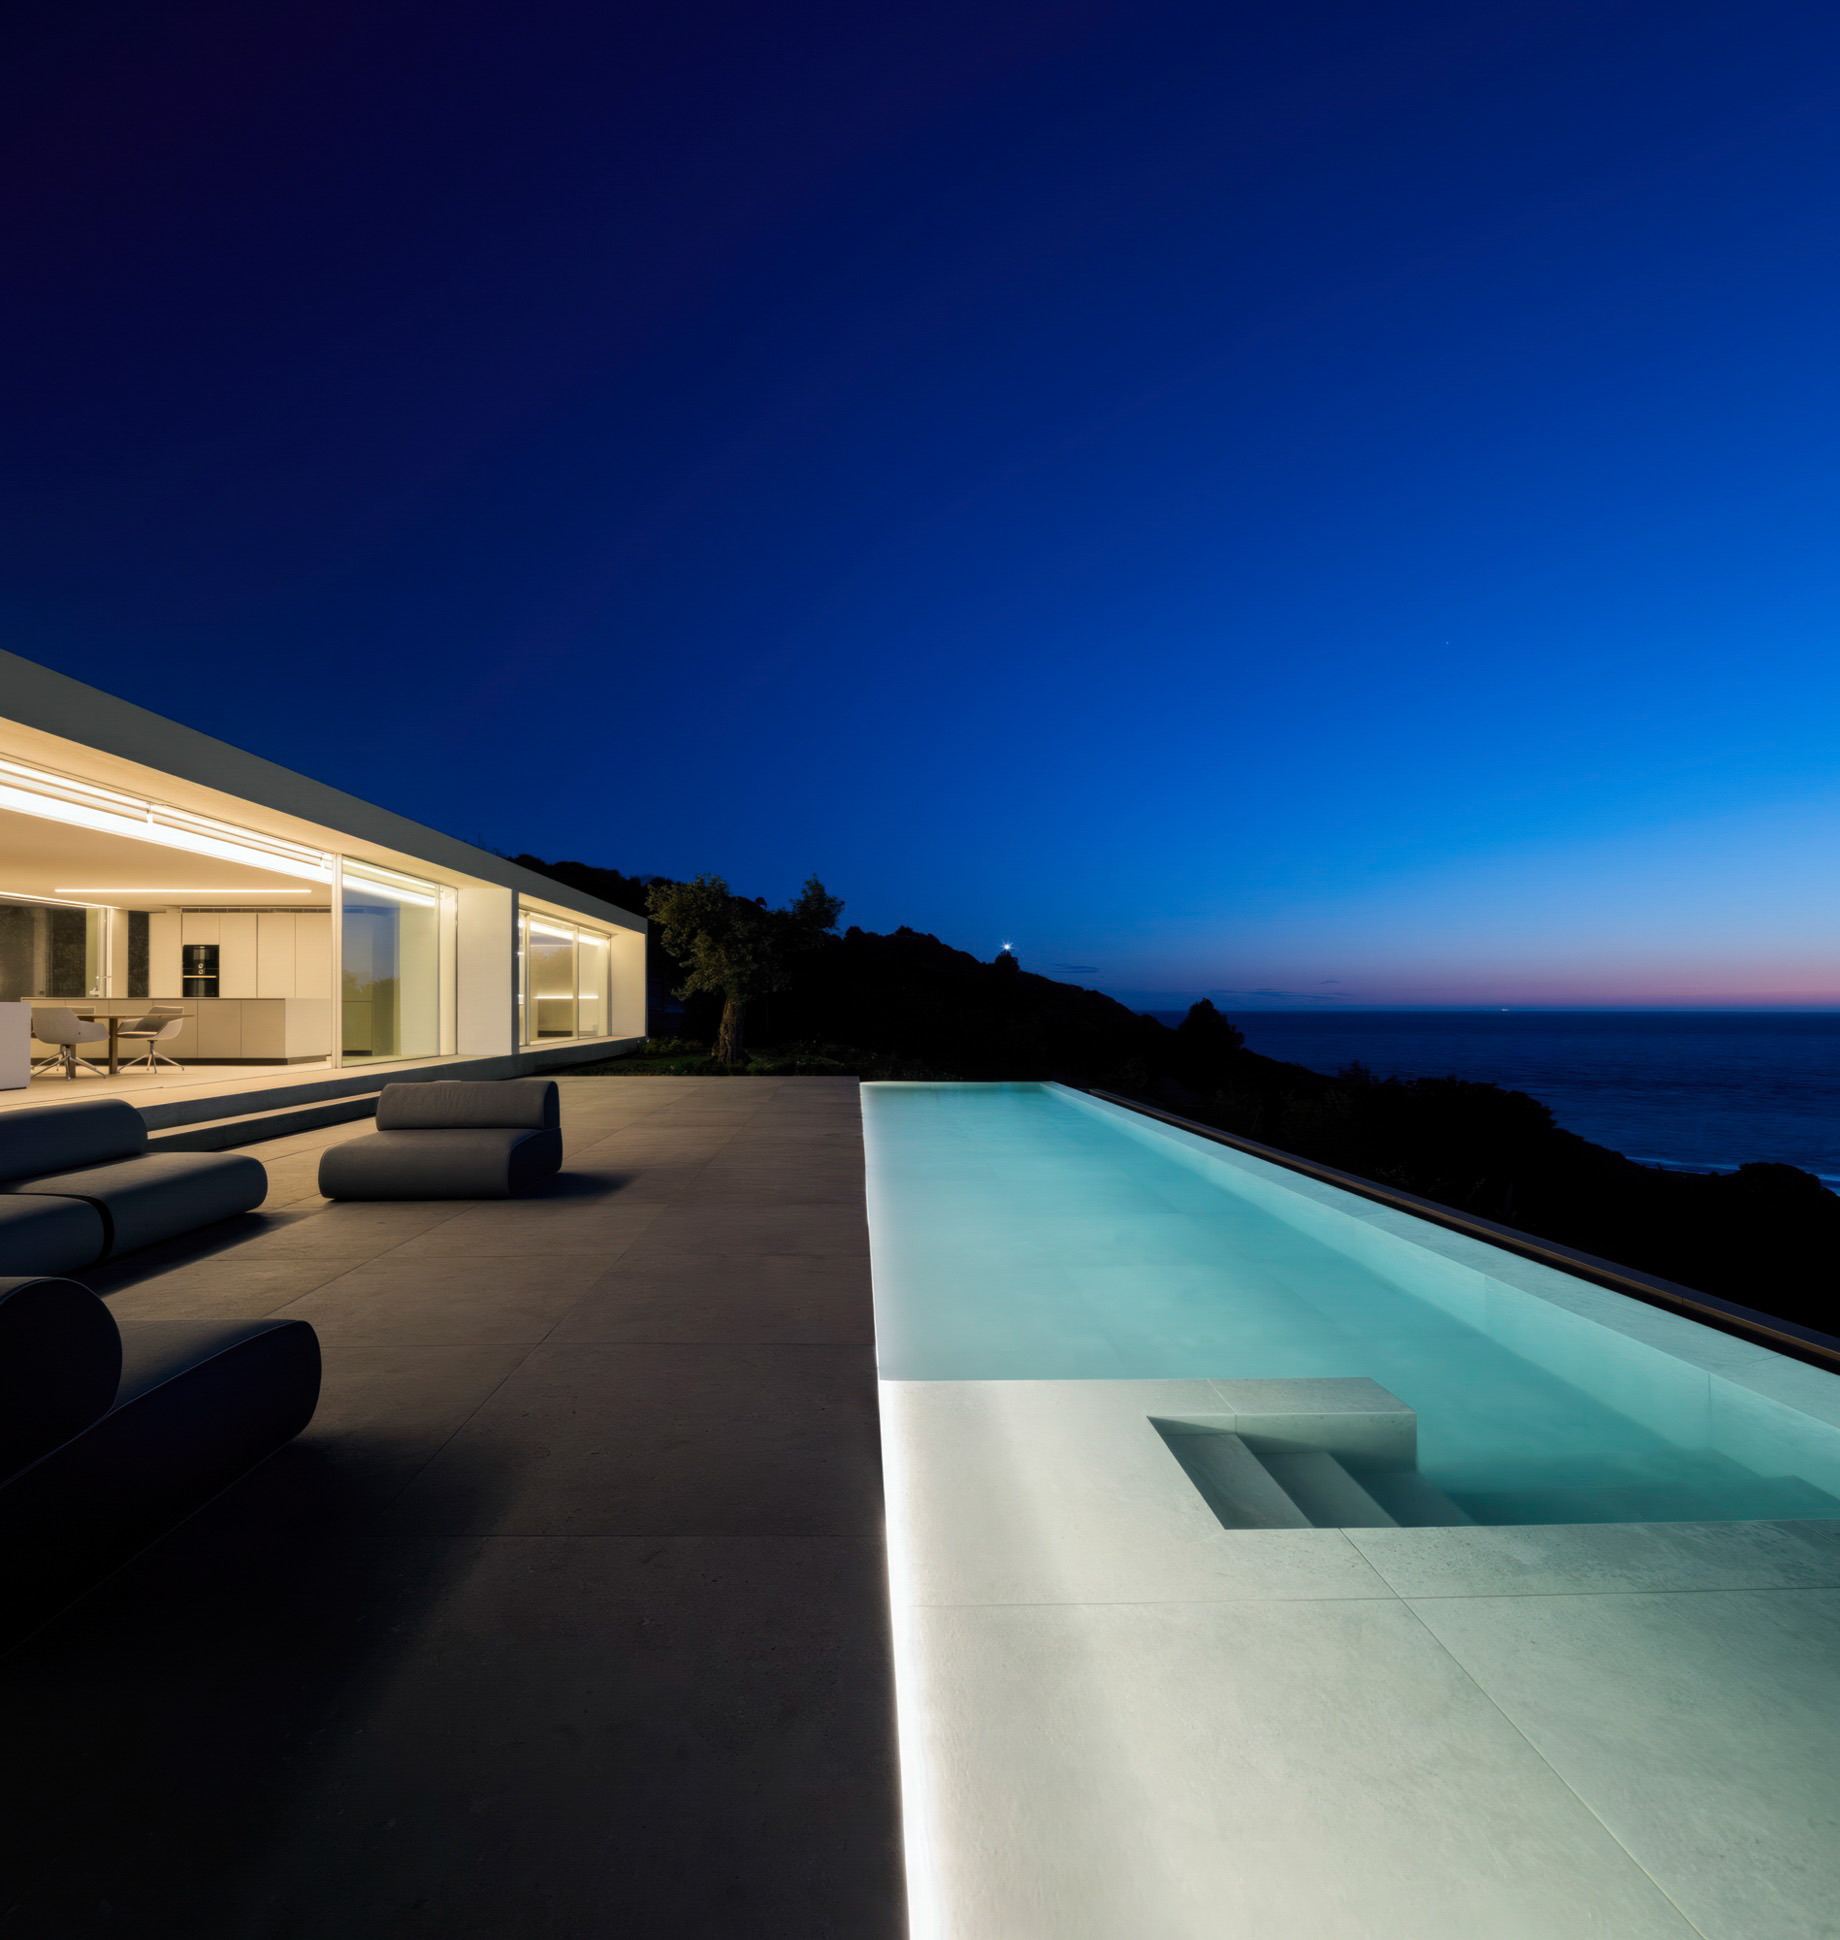 House on the Air Modern Contemporary Villa – Zahara de los Atunes, Spain – 68